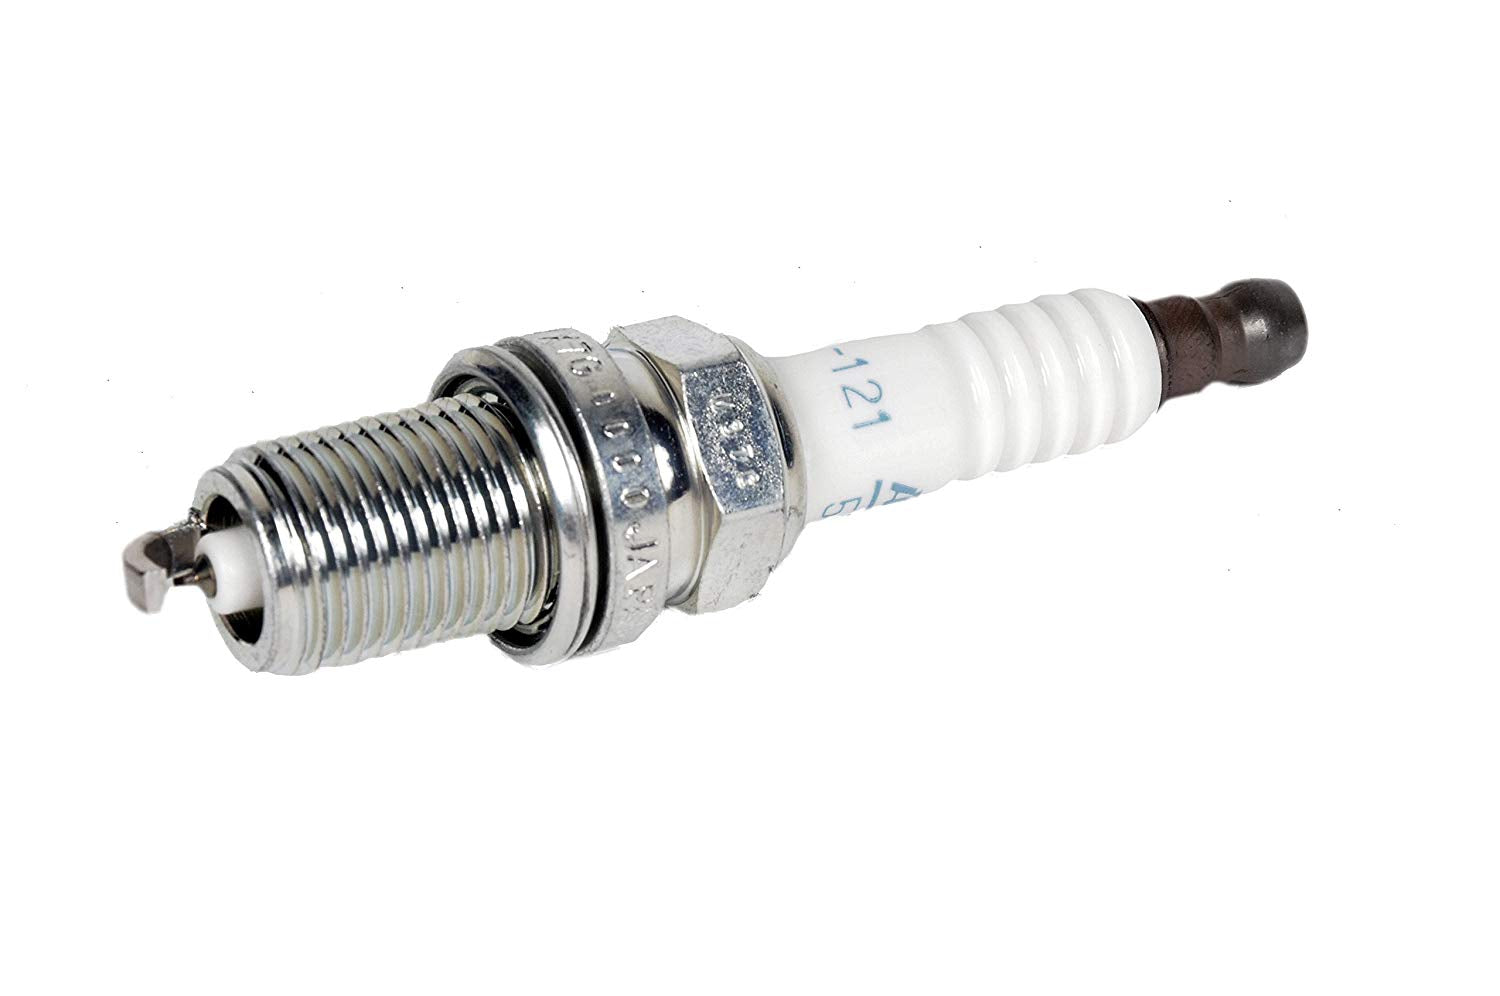 ACDelco 41-121 Professional Iridium Spark Plug (Pack of 1)